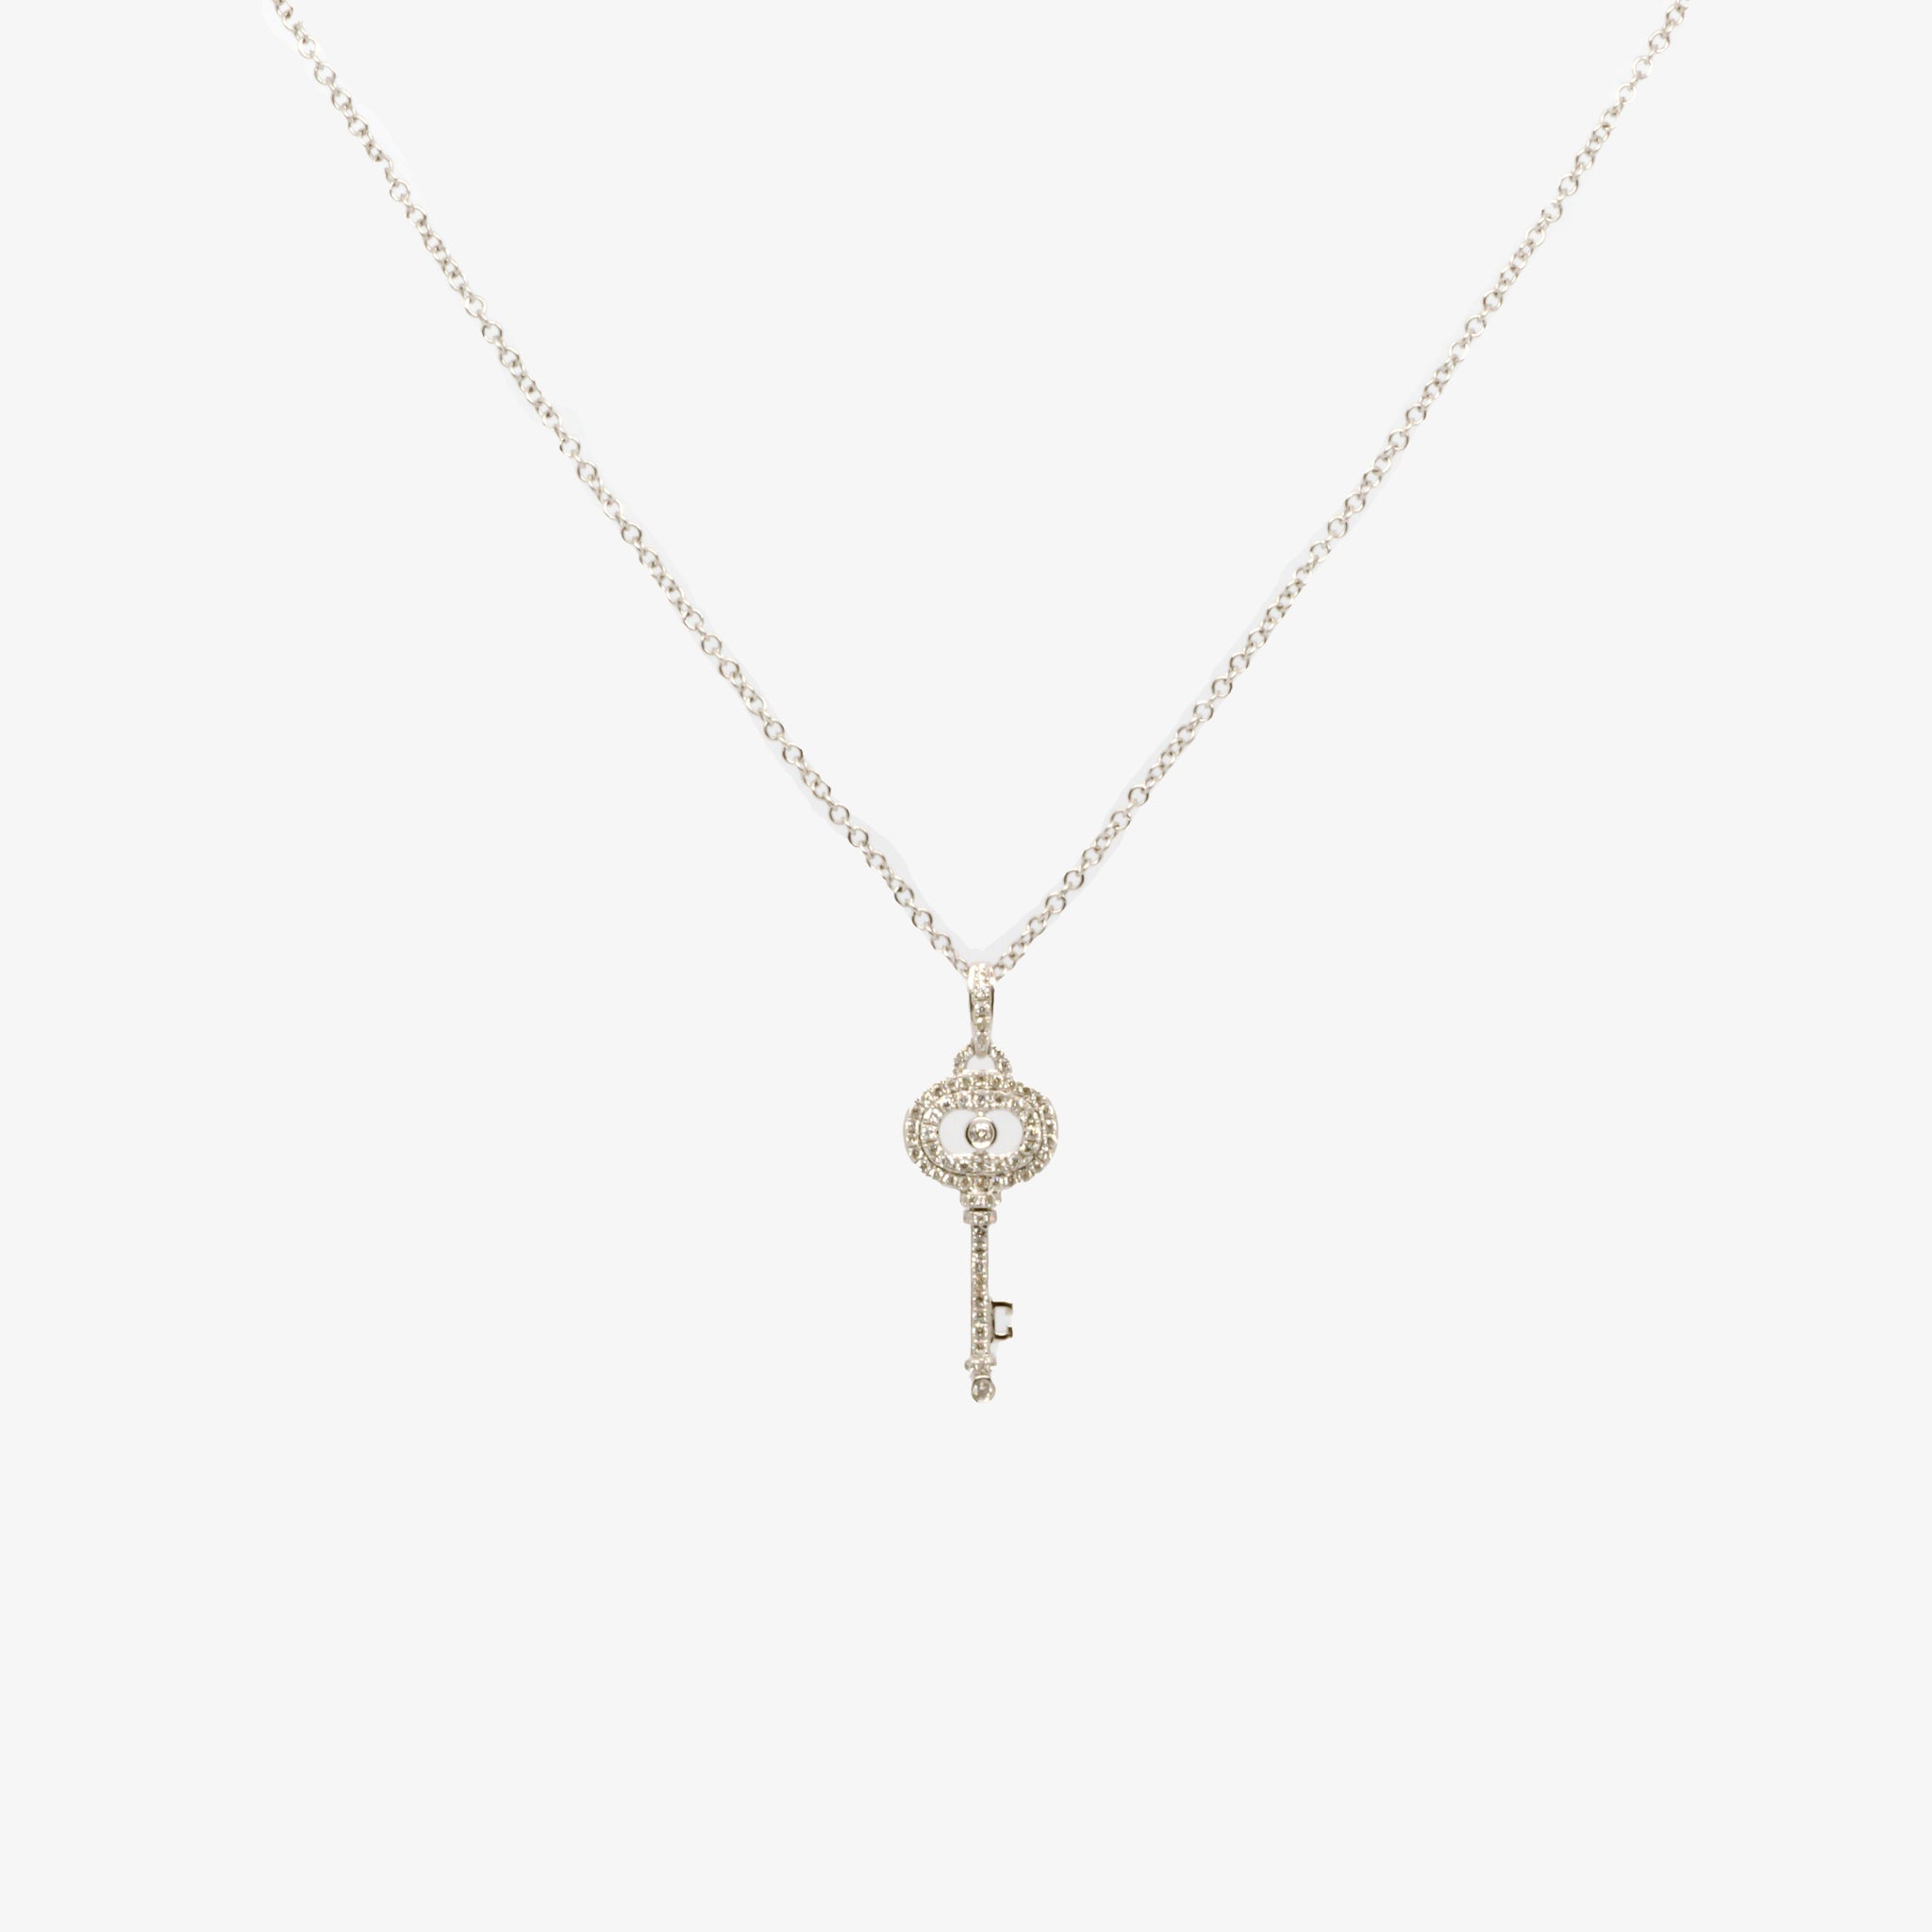 Classic Skeleton Key Pendant Necklace | BASHERT JEWELRY - Bashert Jewelry